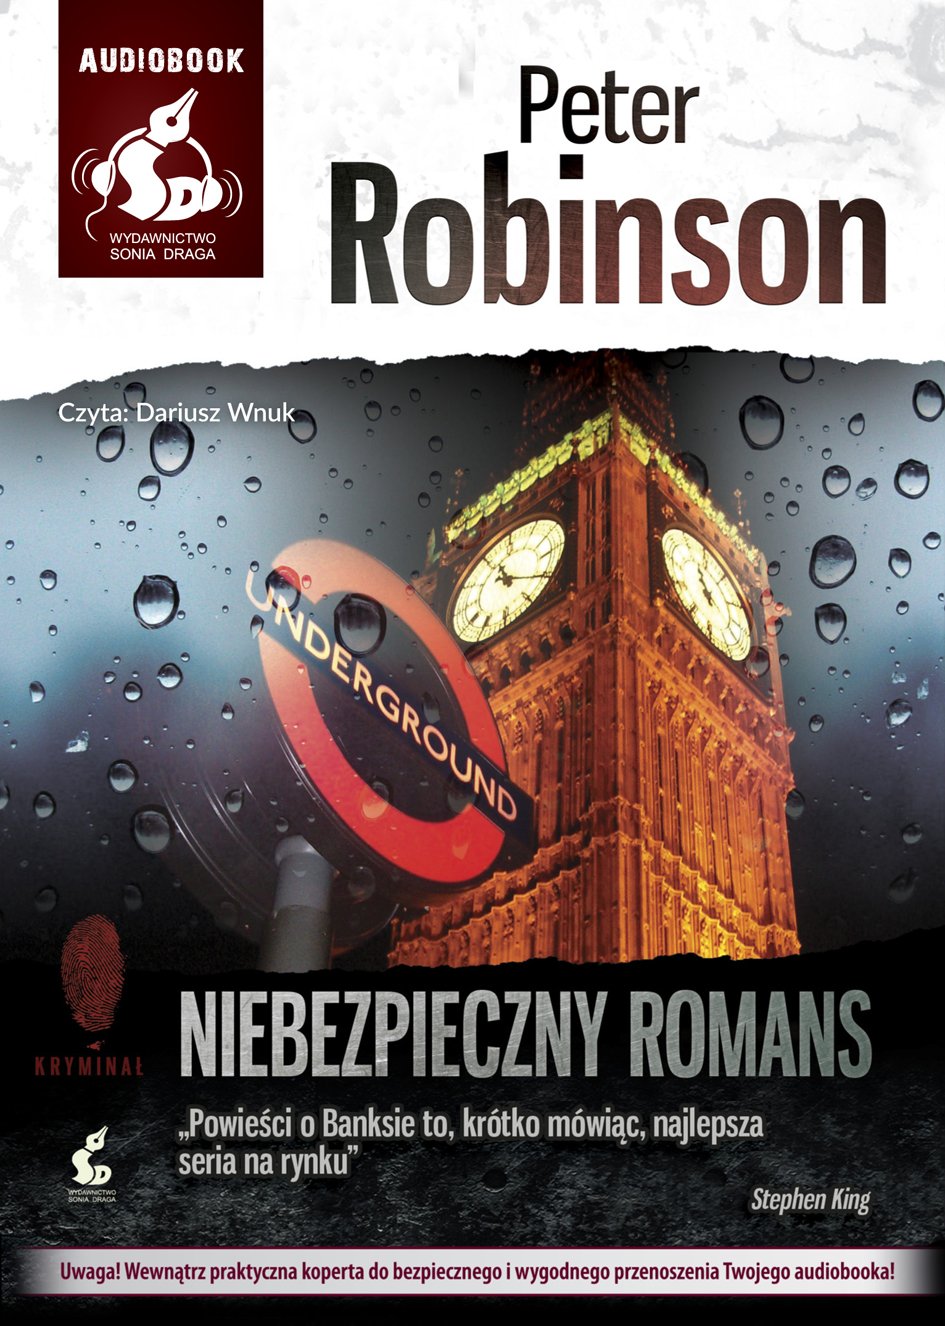 ROBINSON PETER – INSPEKTOR BANKS 15. NIEBEZPIECZNY ROMANS